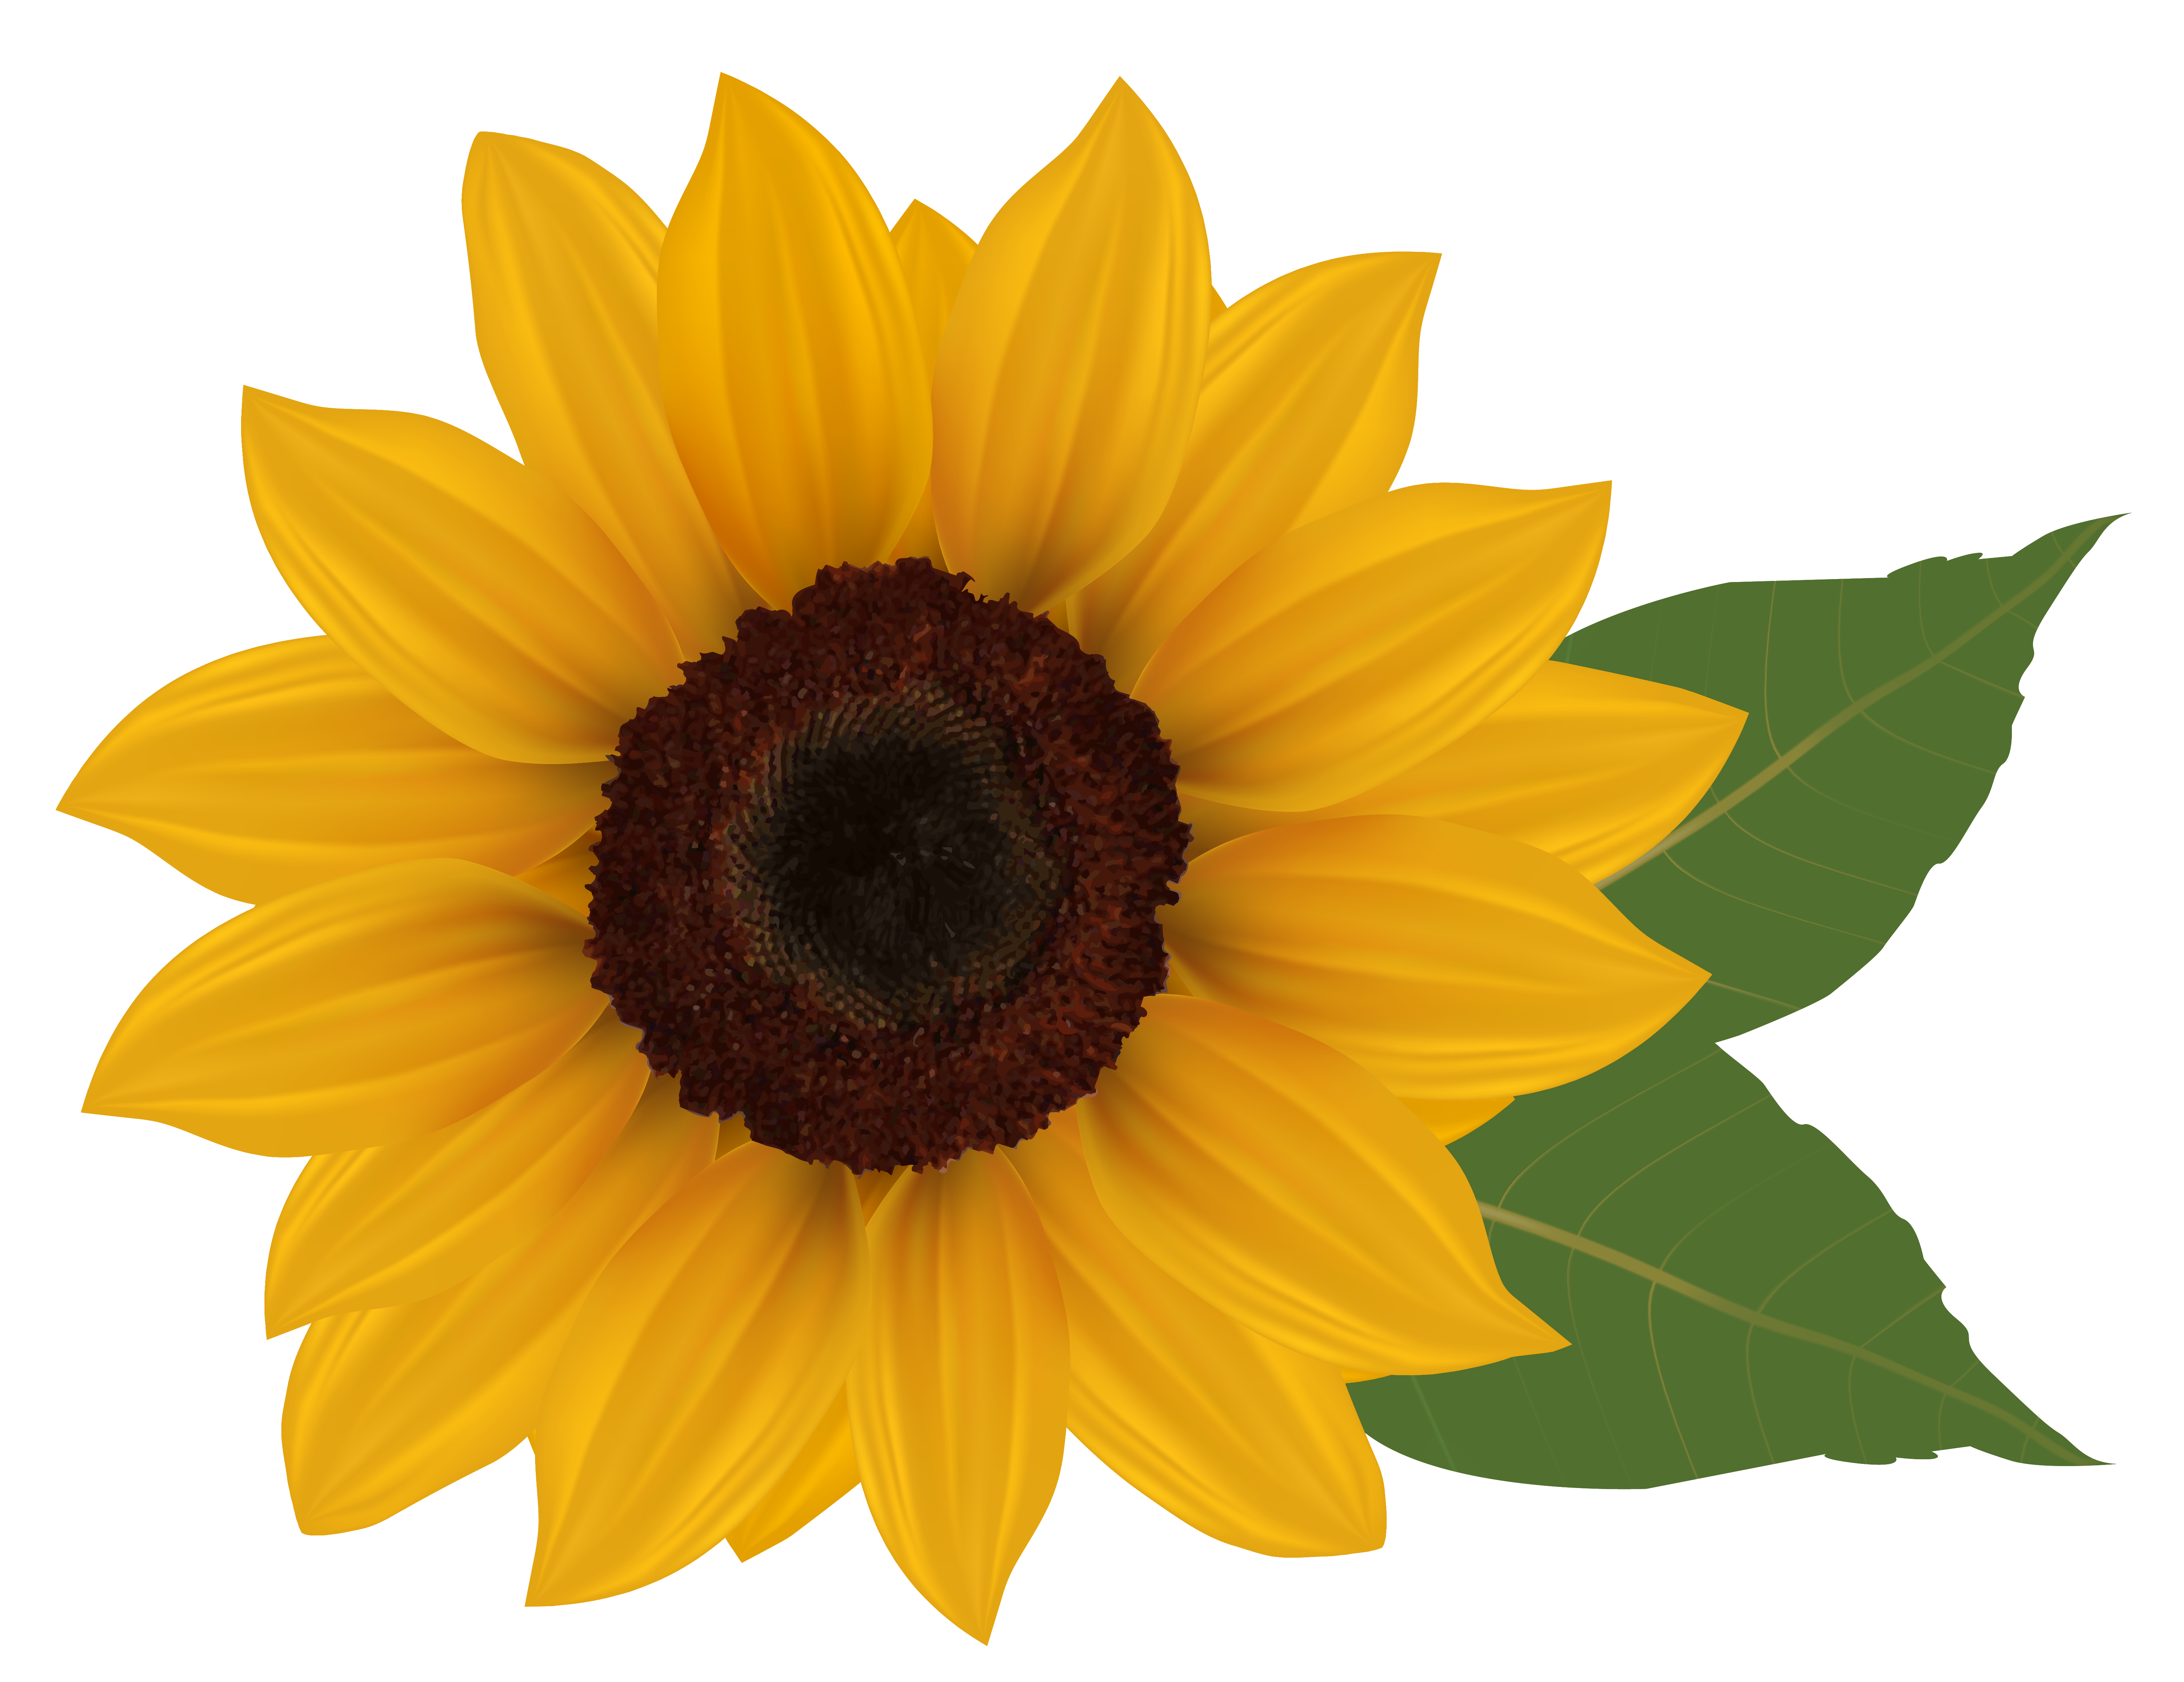 sunflower: Sunflower isolated